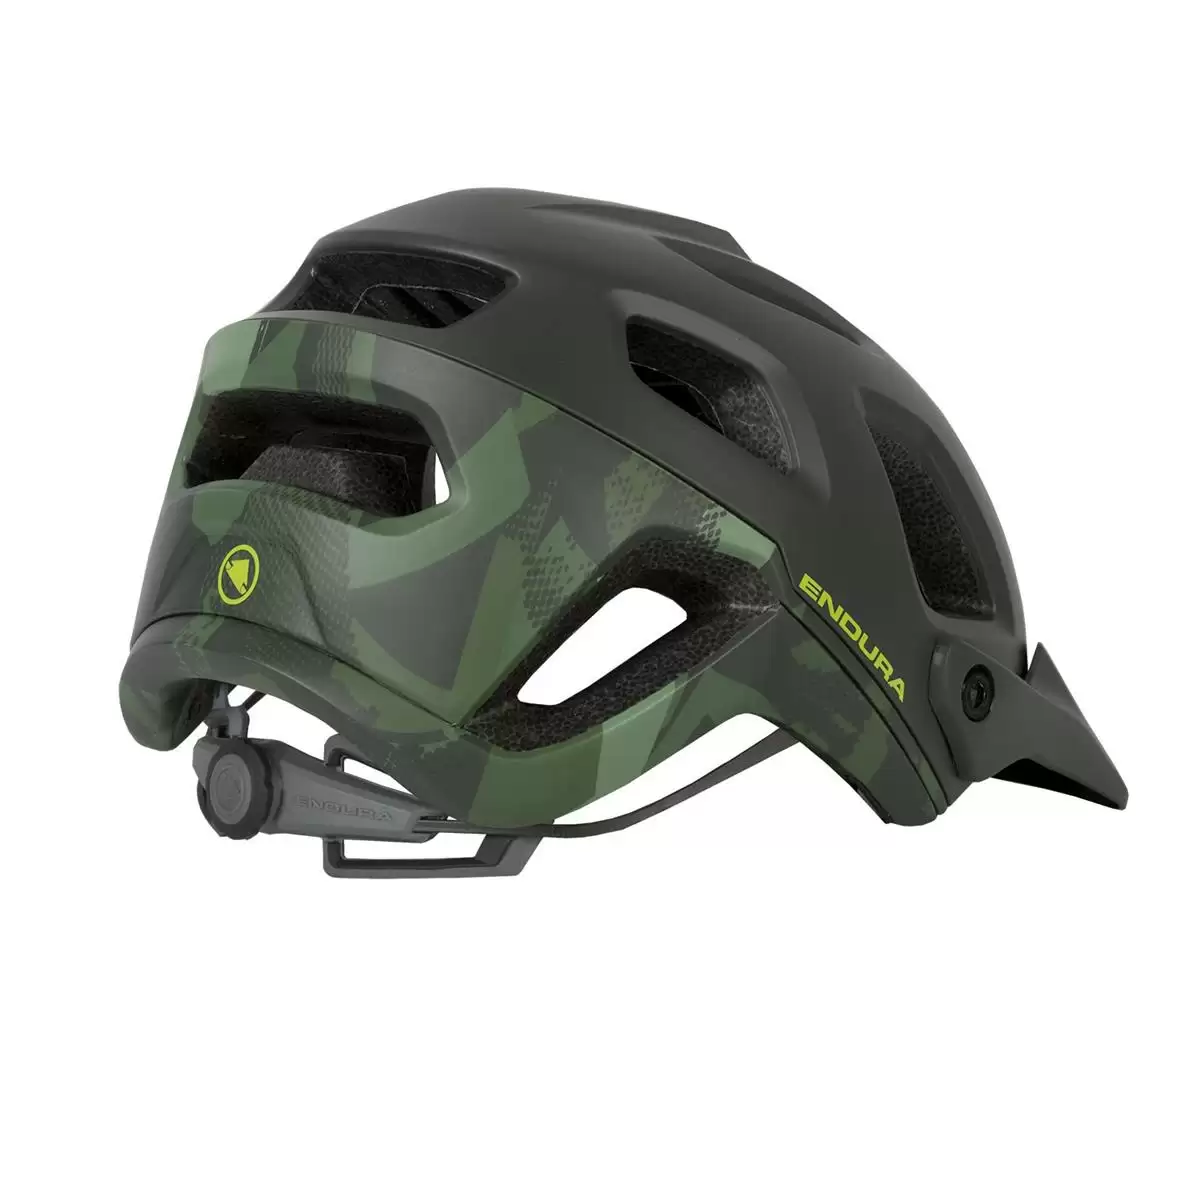 helmet SingleTrack Helmet II green size L/XL (58-63cm) #1